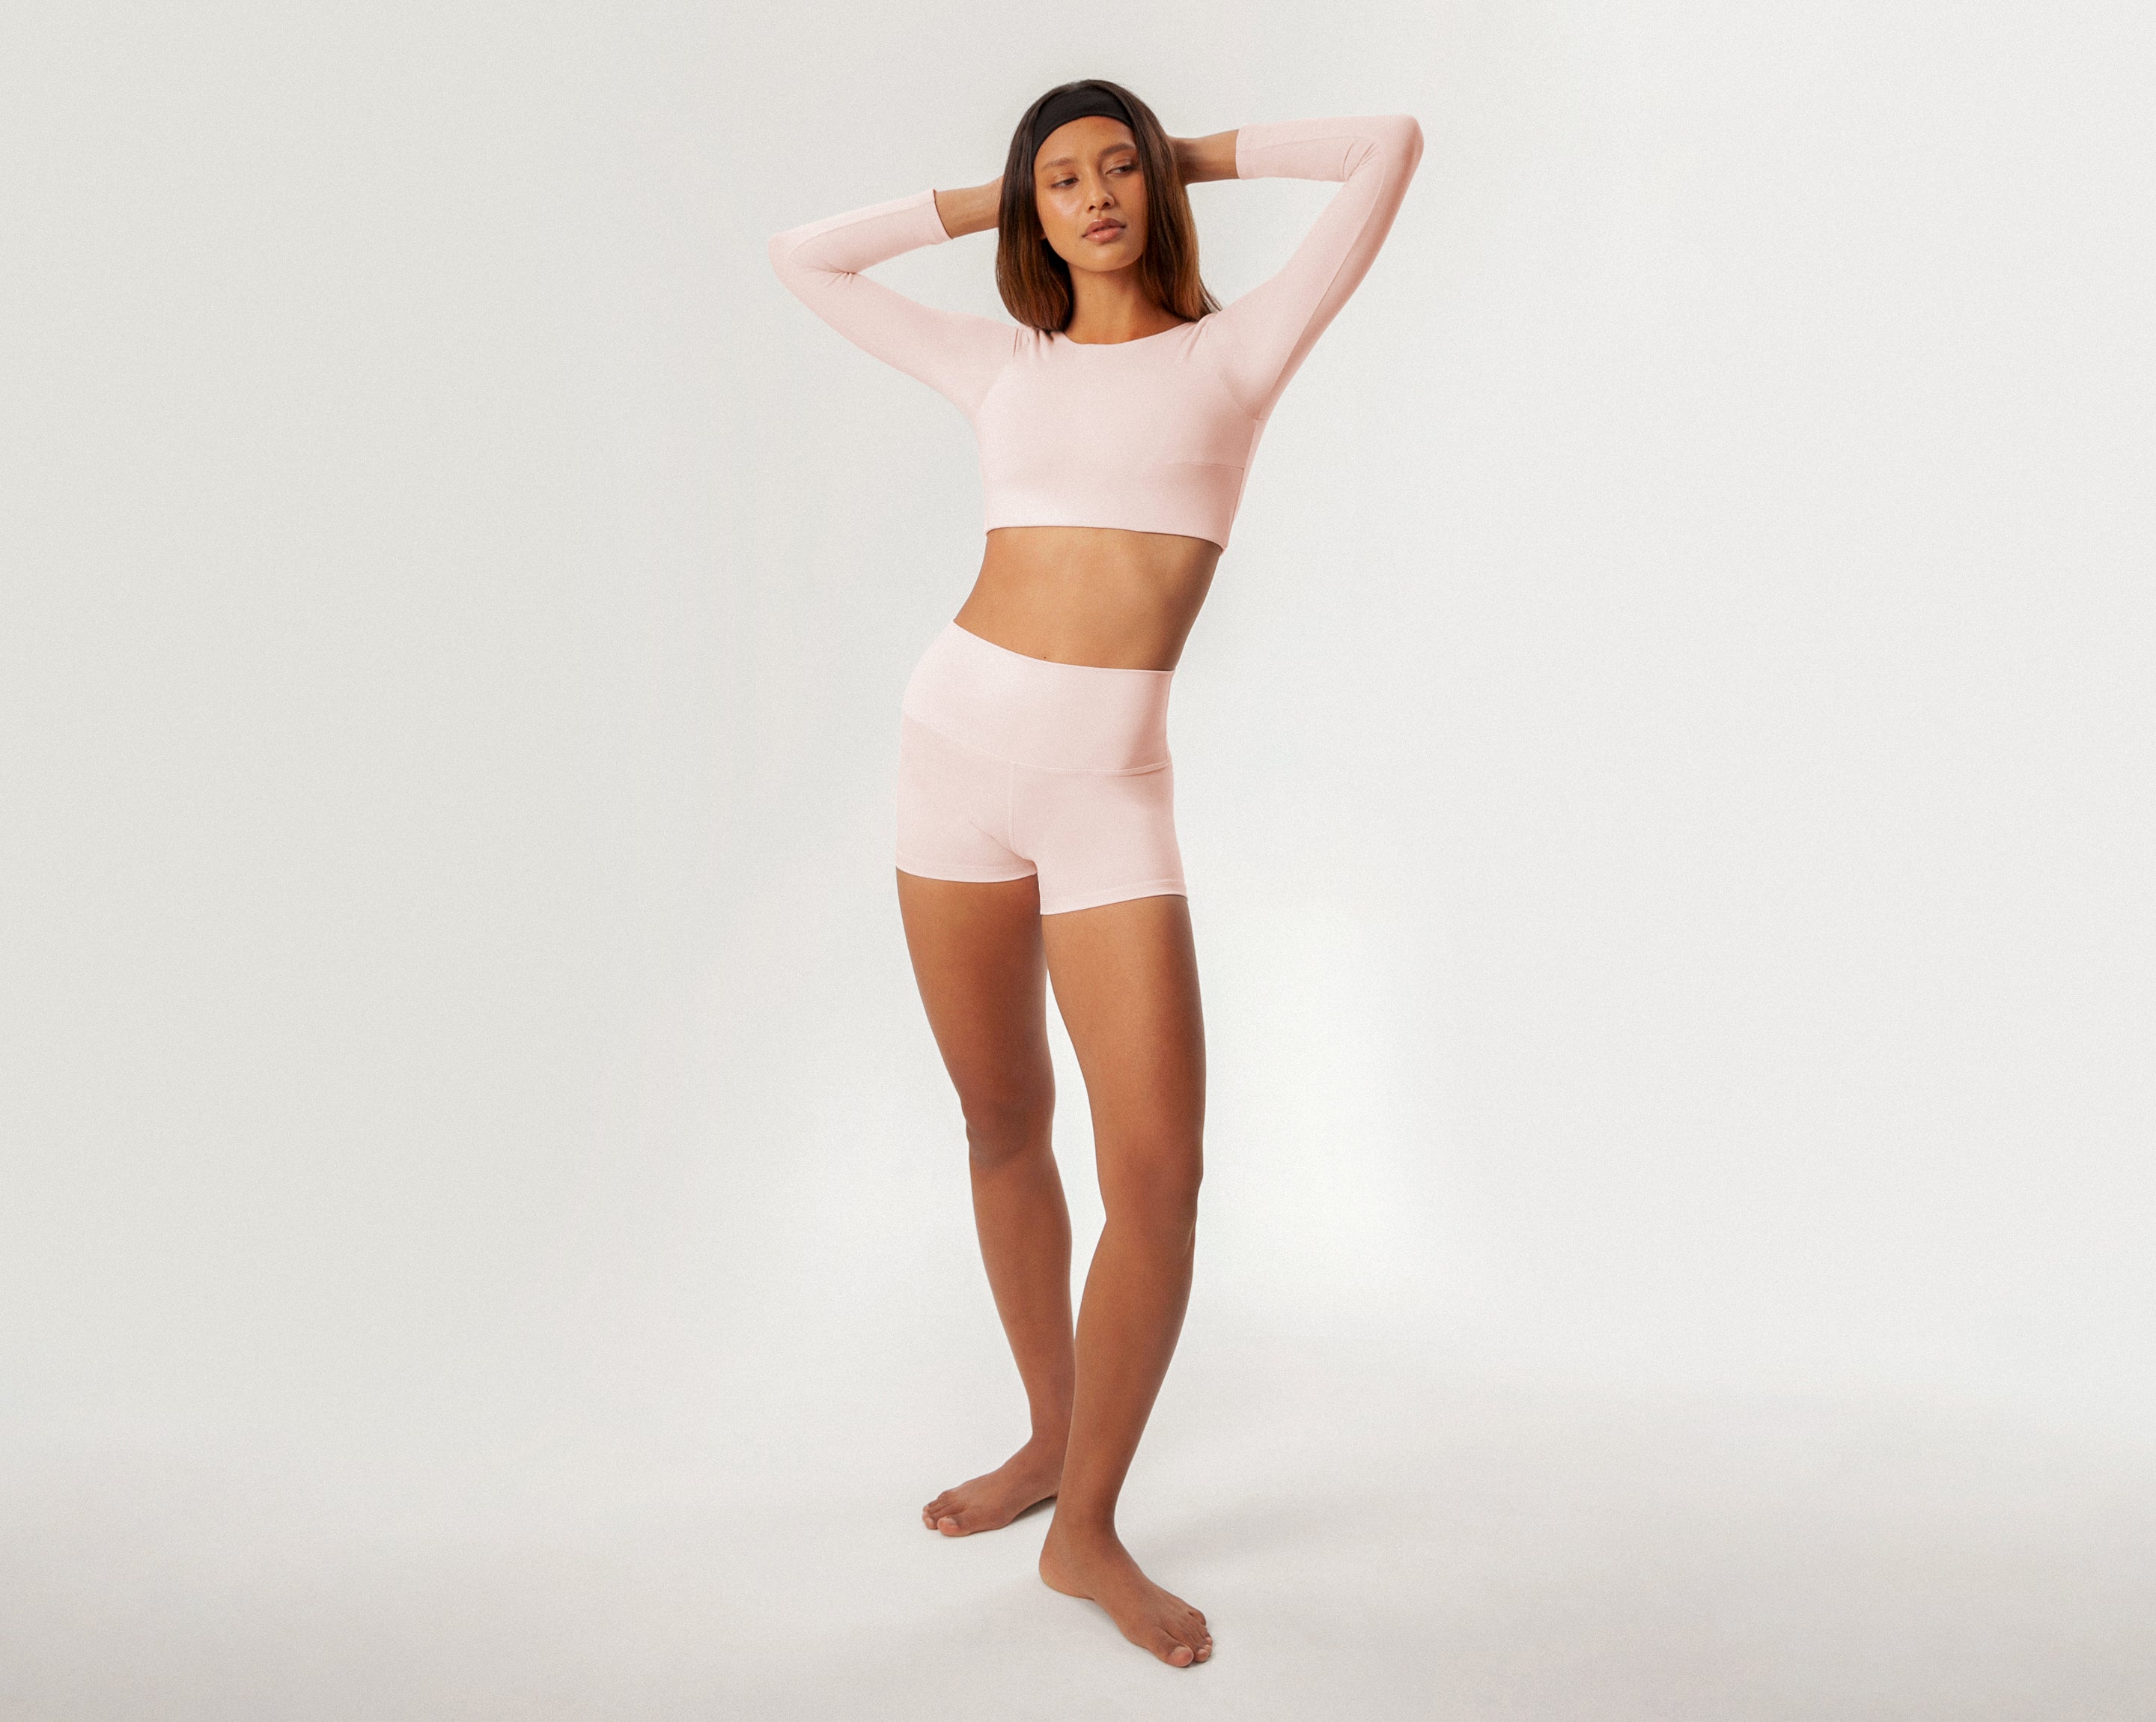 GetUSCart- ALWAYS Women Riverdale Merchandise Yoga Shorts